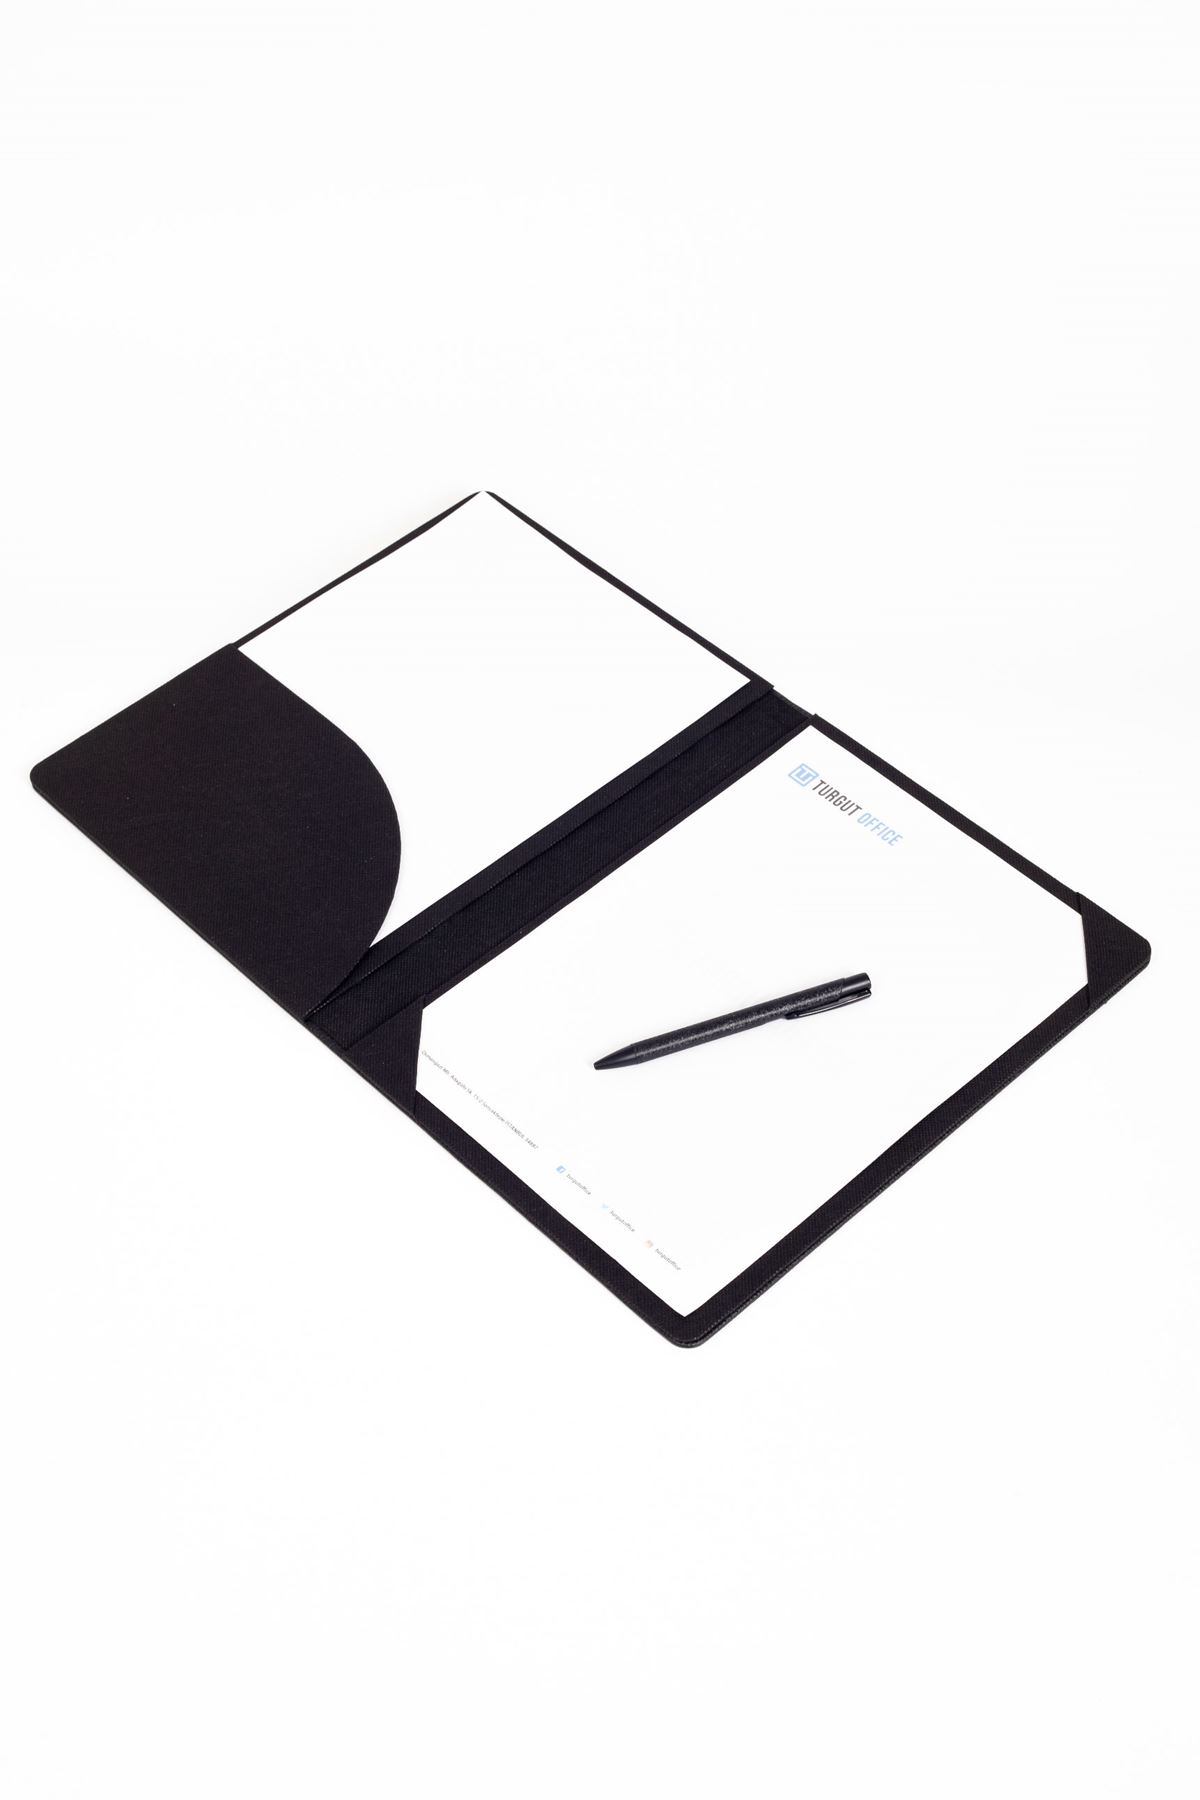 Leather Desk Writing Pad - Signature Pad